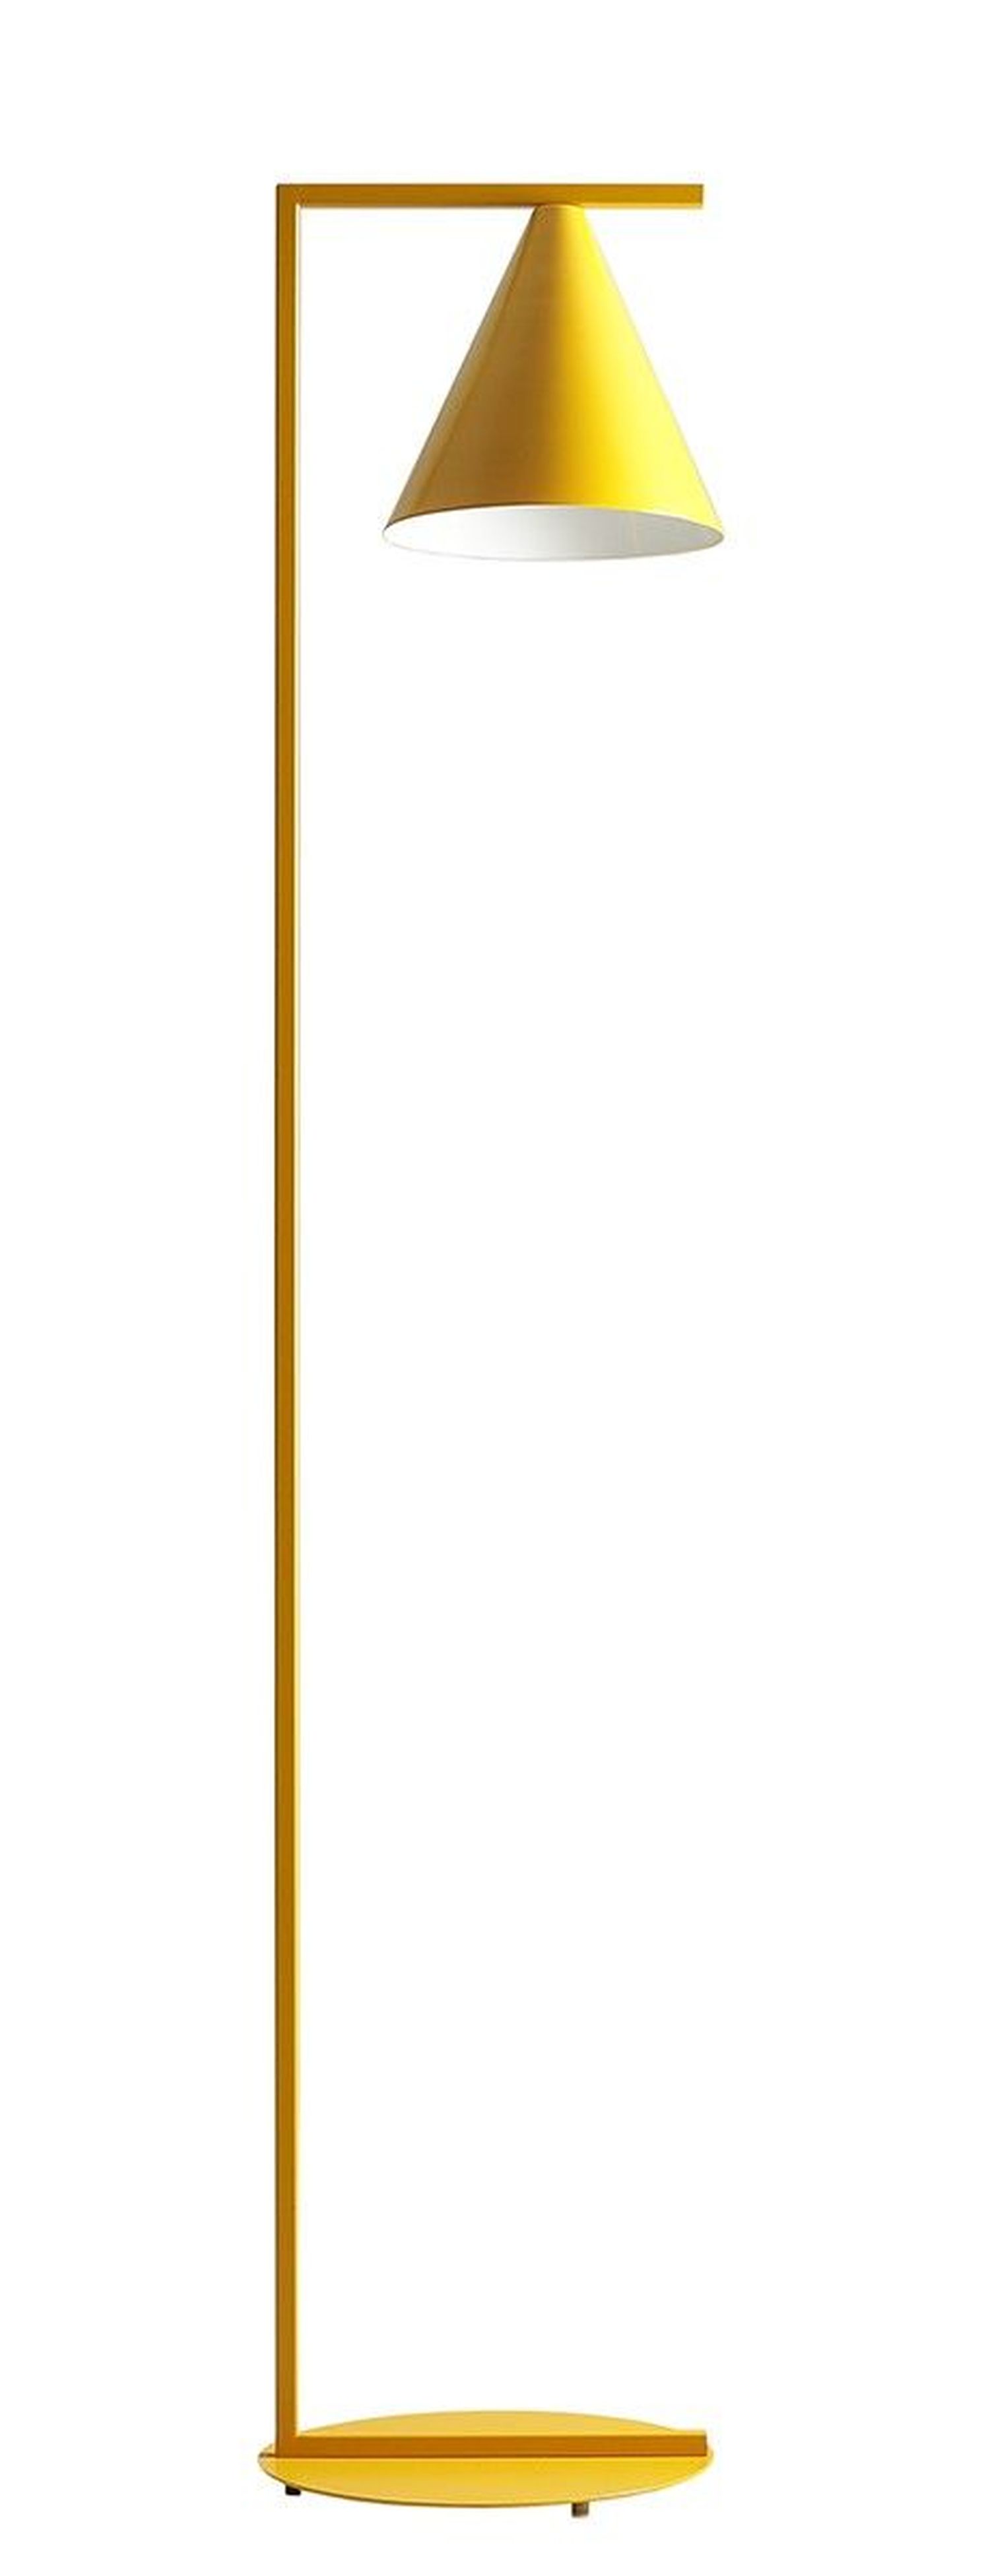 Gelbe Stehlampe Metall E27 165 cm Kegelschirm dekorativ